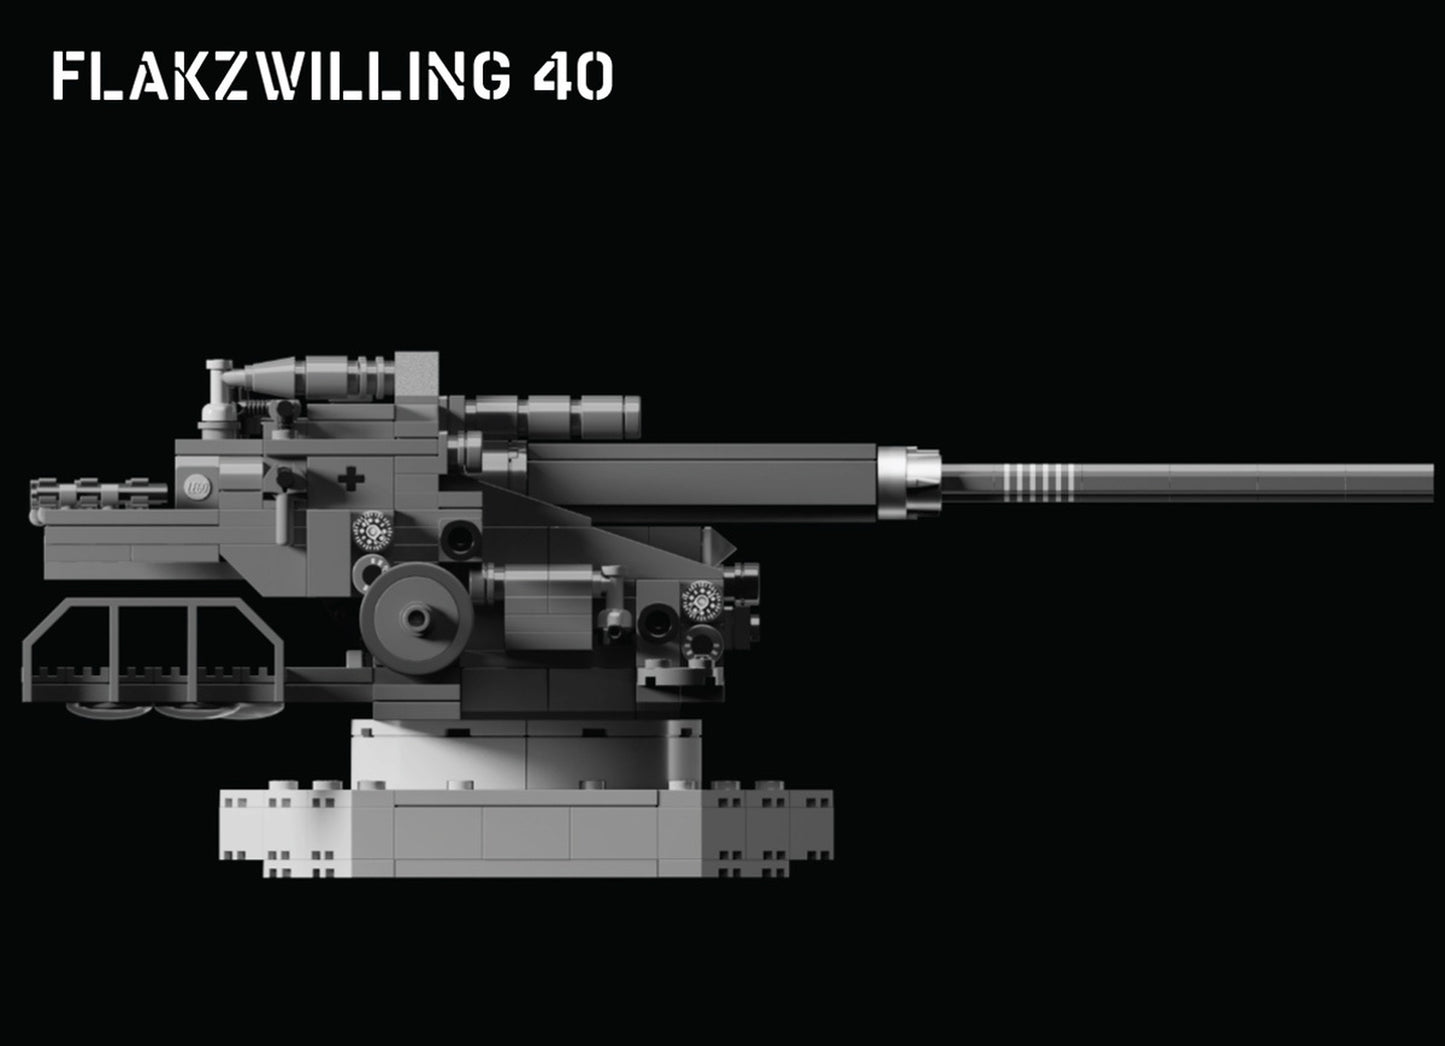 Flakzwilling 40 – 12.8 cm FlaK 40 Twin Mount